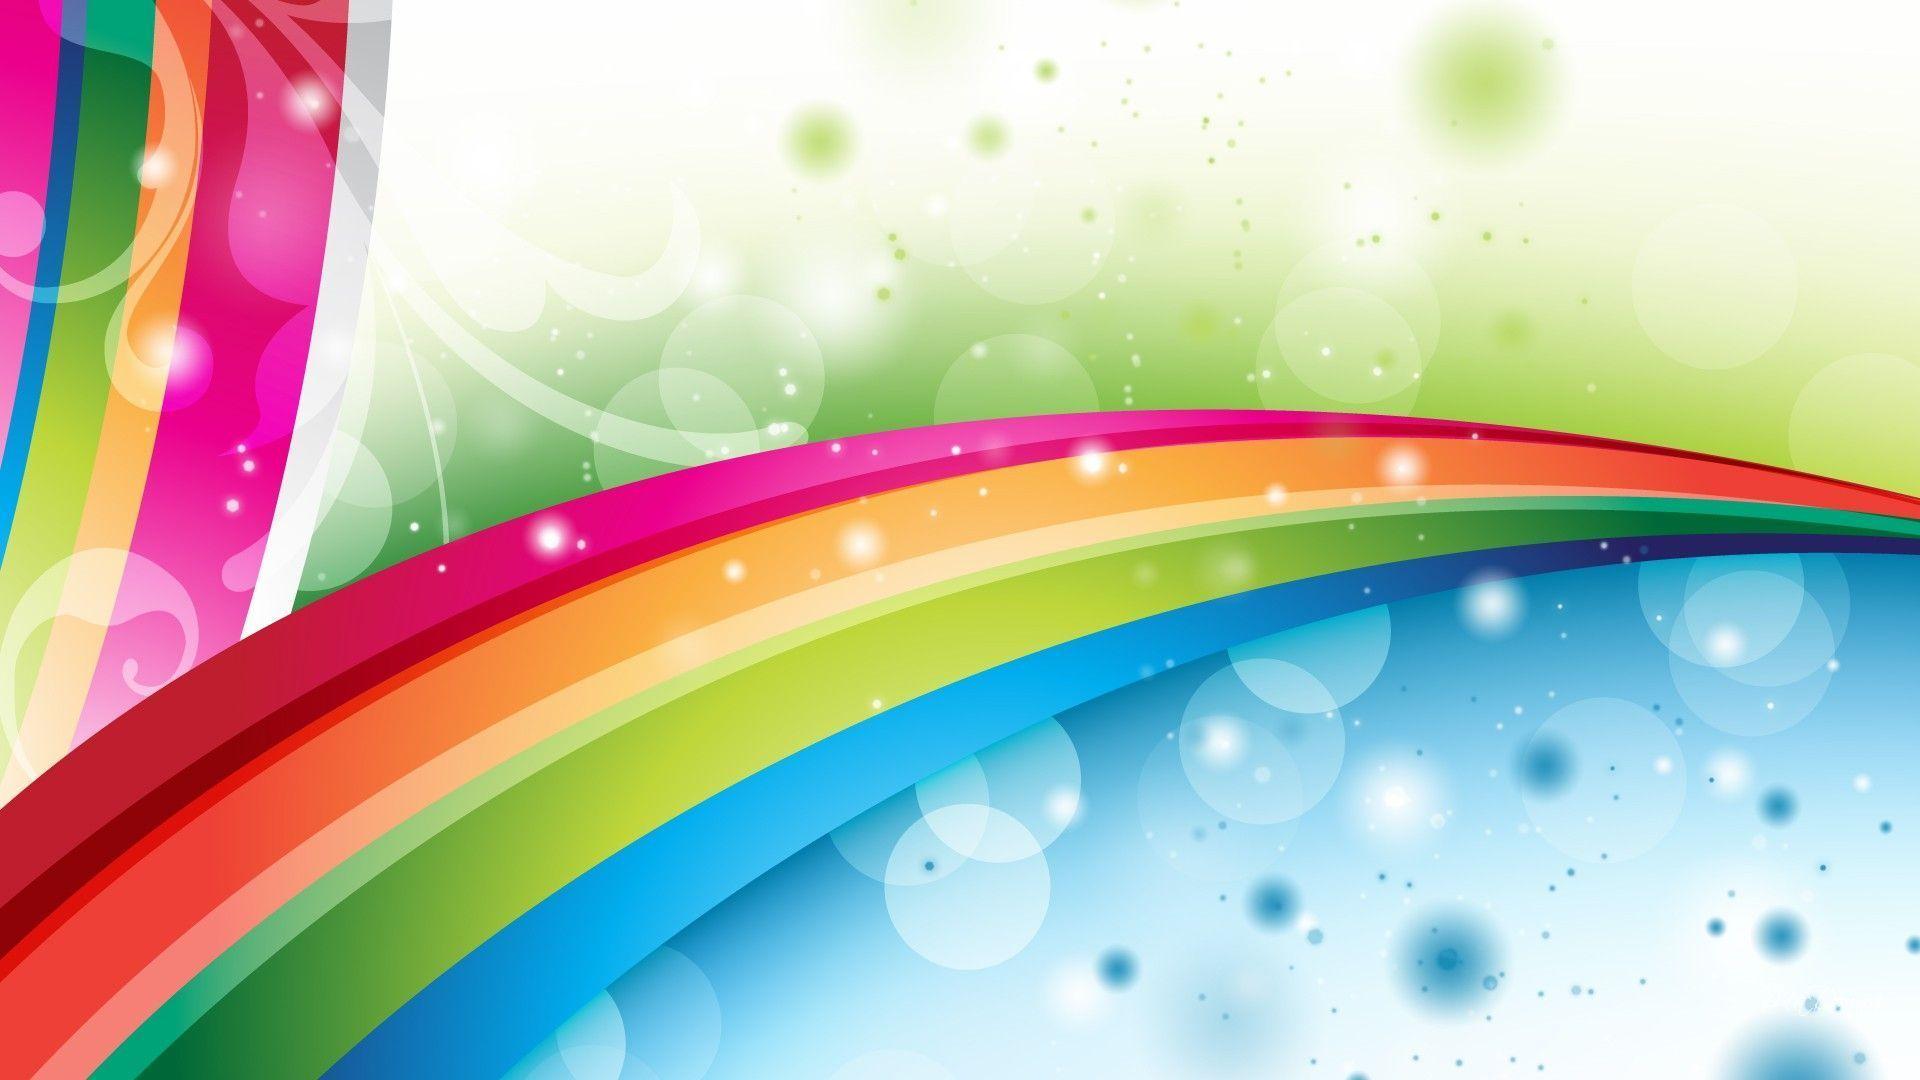 Abstract Rainbow Color 3 3616 Image HD Wallpaper. Wallpaper